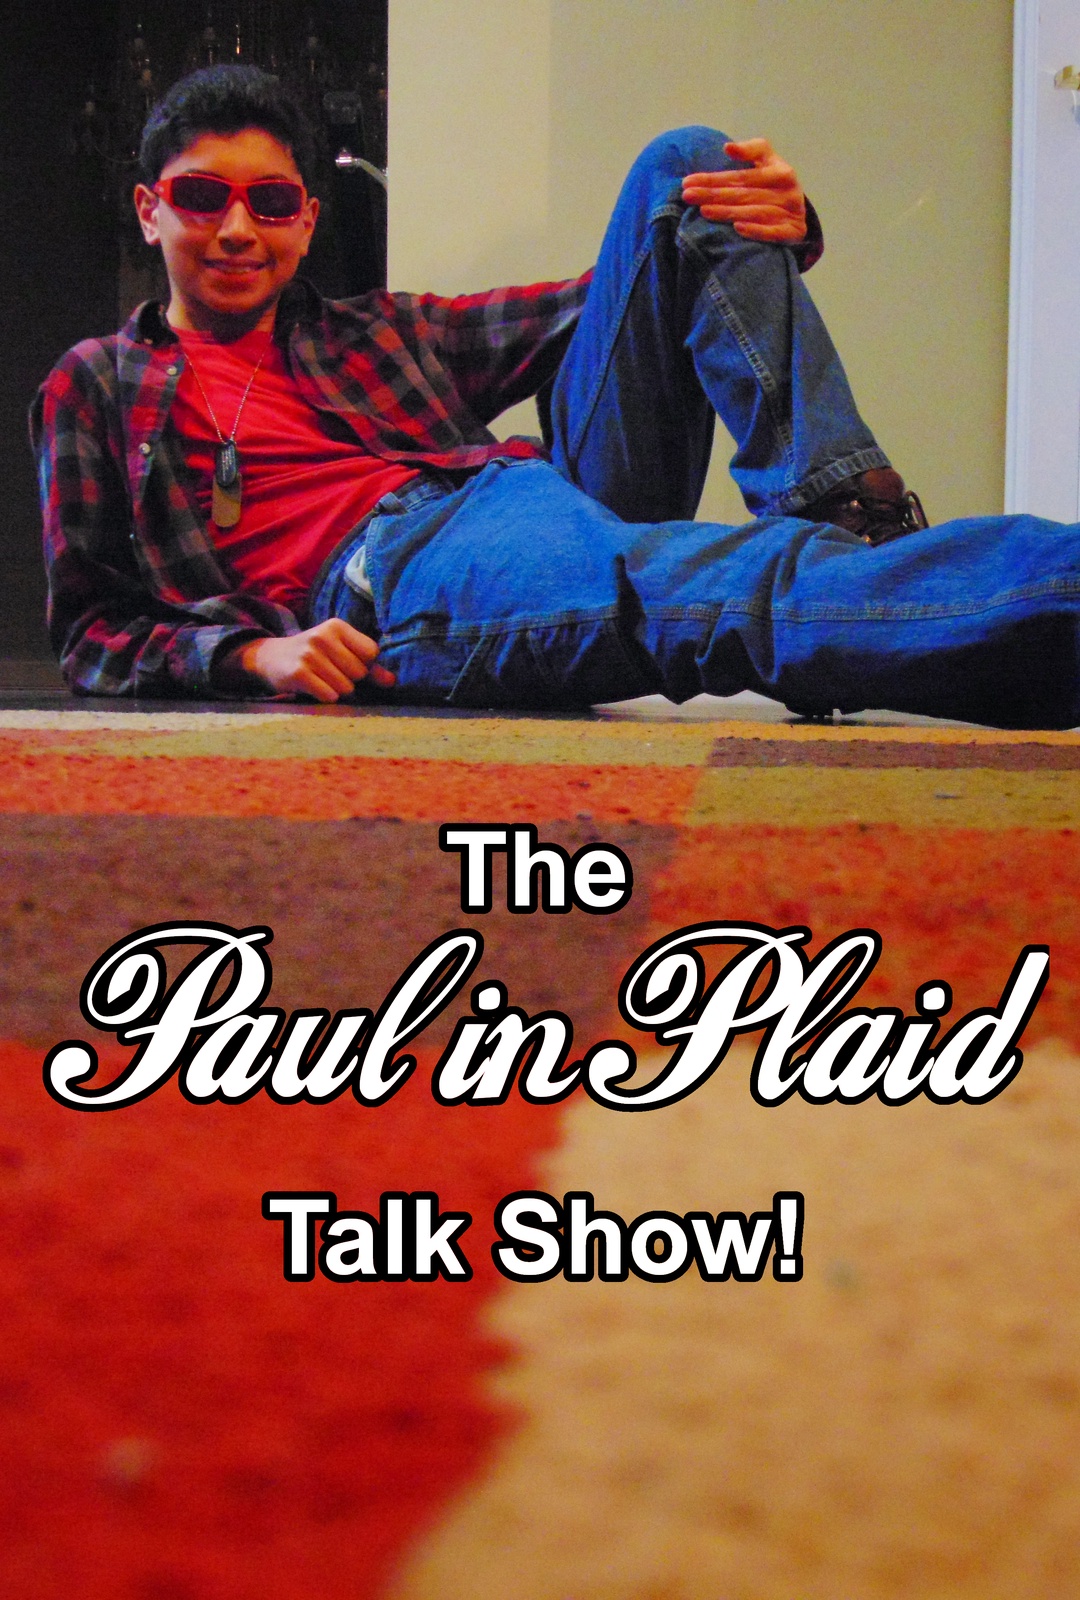 The Paul Behragam Talk Show